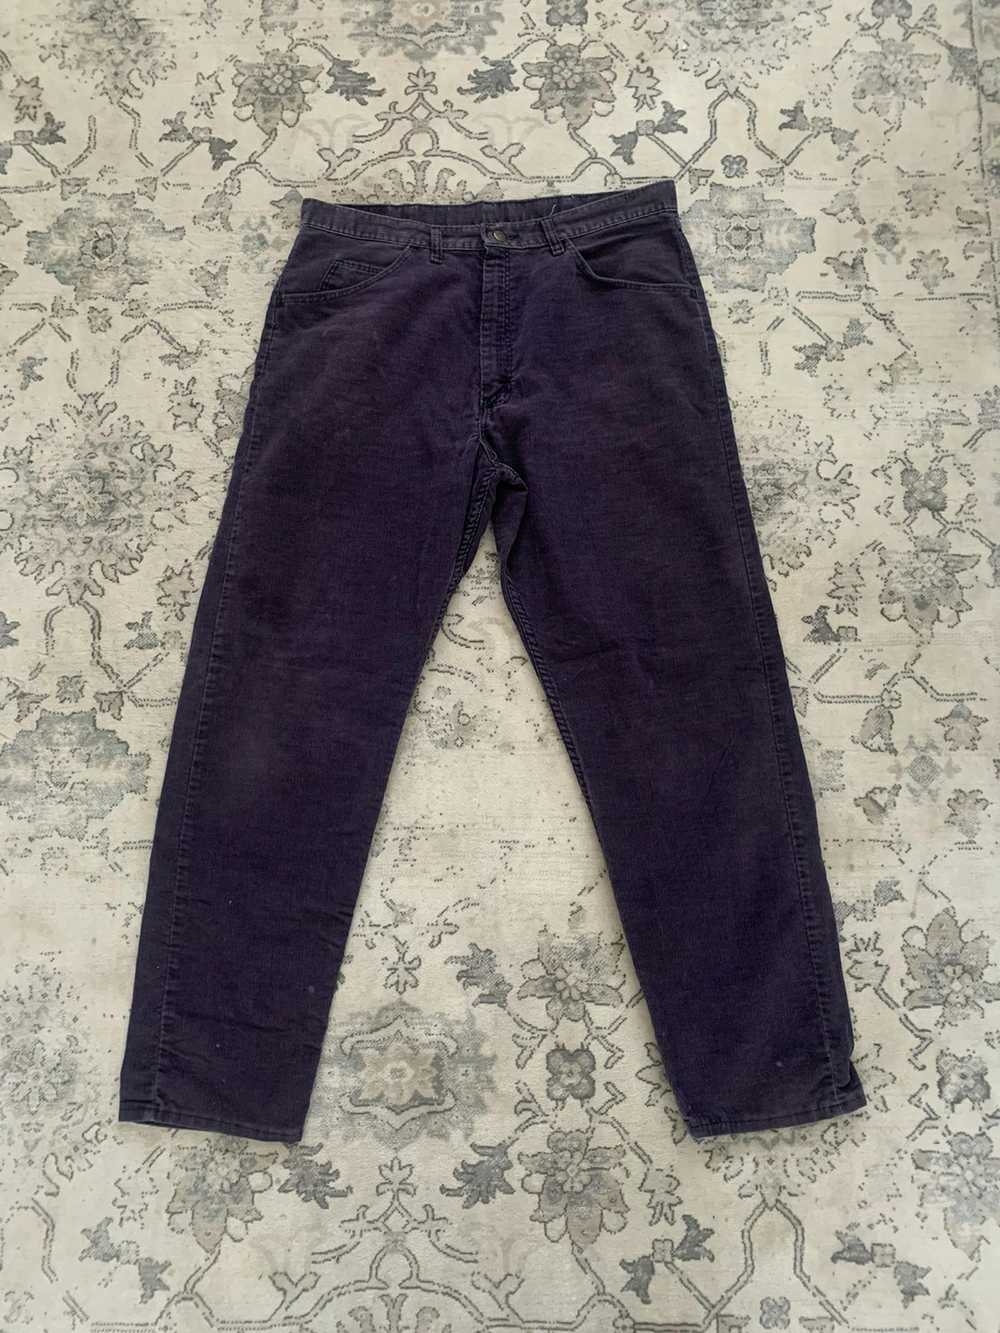 Vintage × Wrangler Vintage Wrangler Corduroy Jeans - image 1